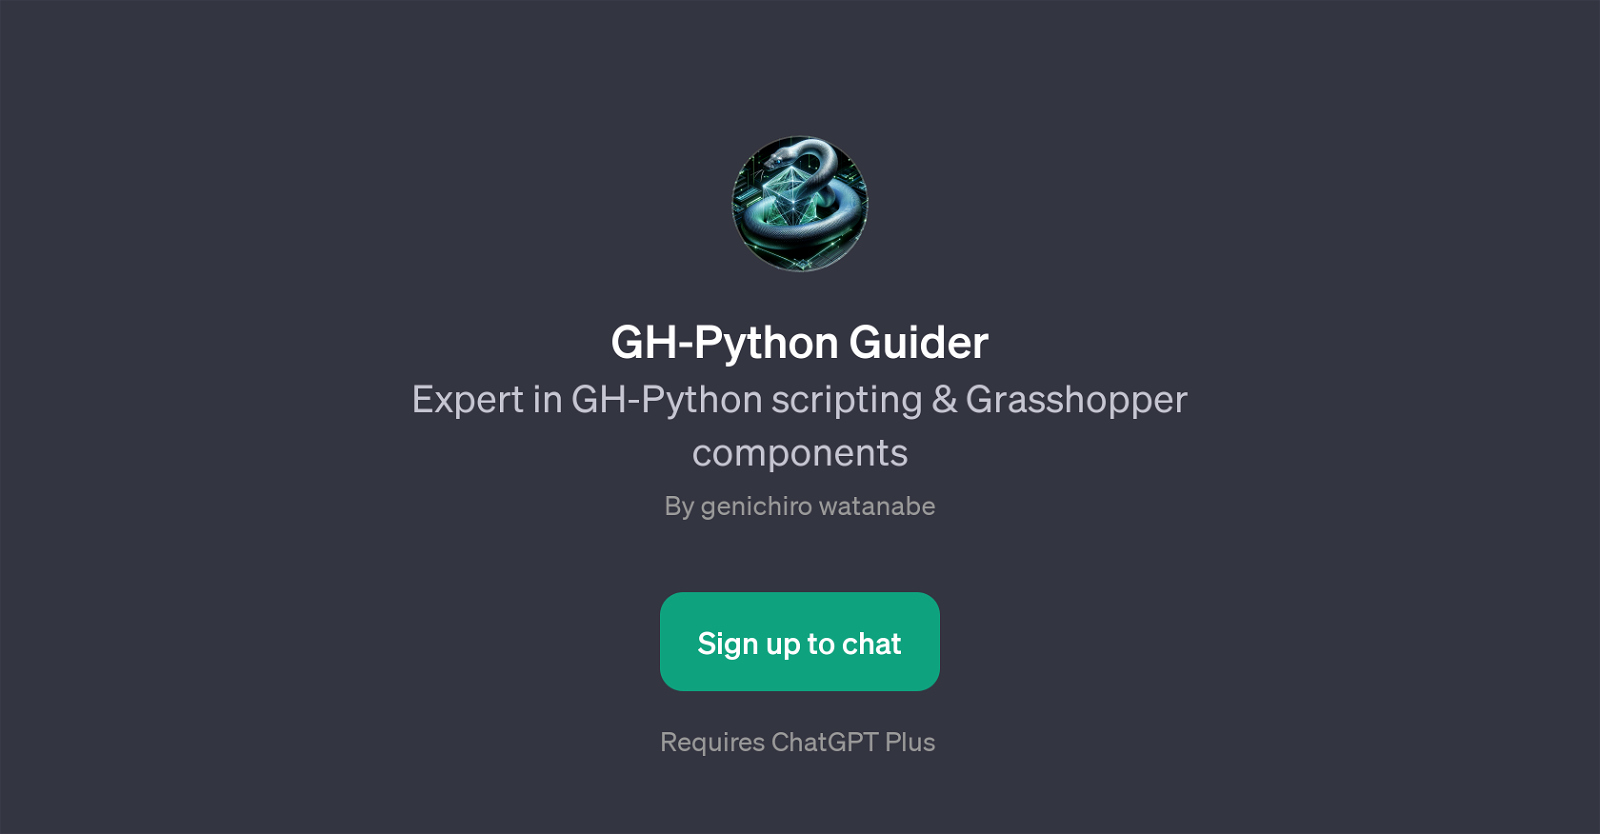 GH-Python Guider website